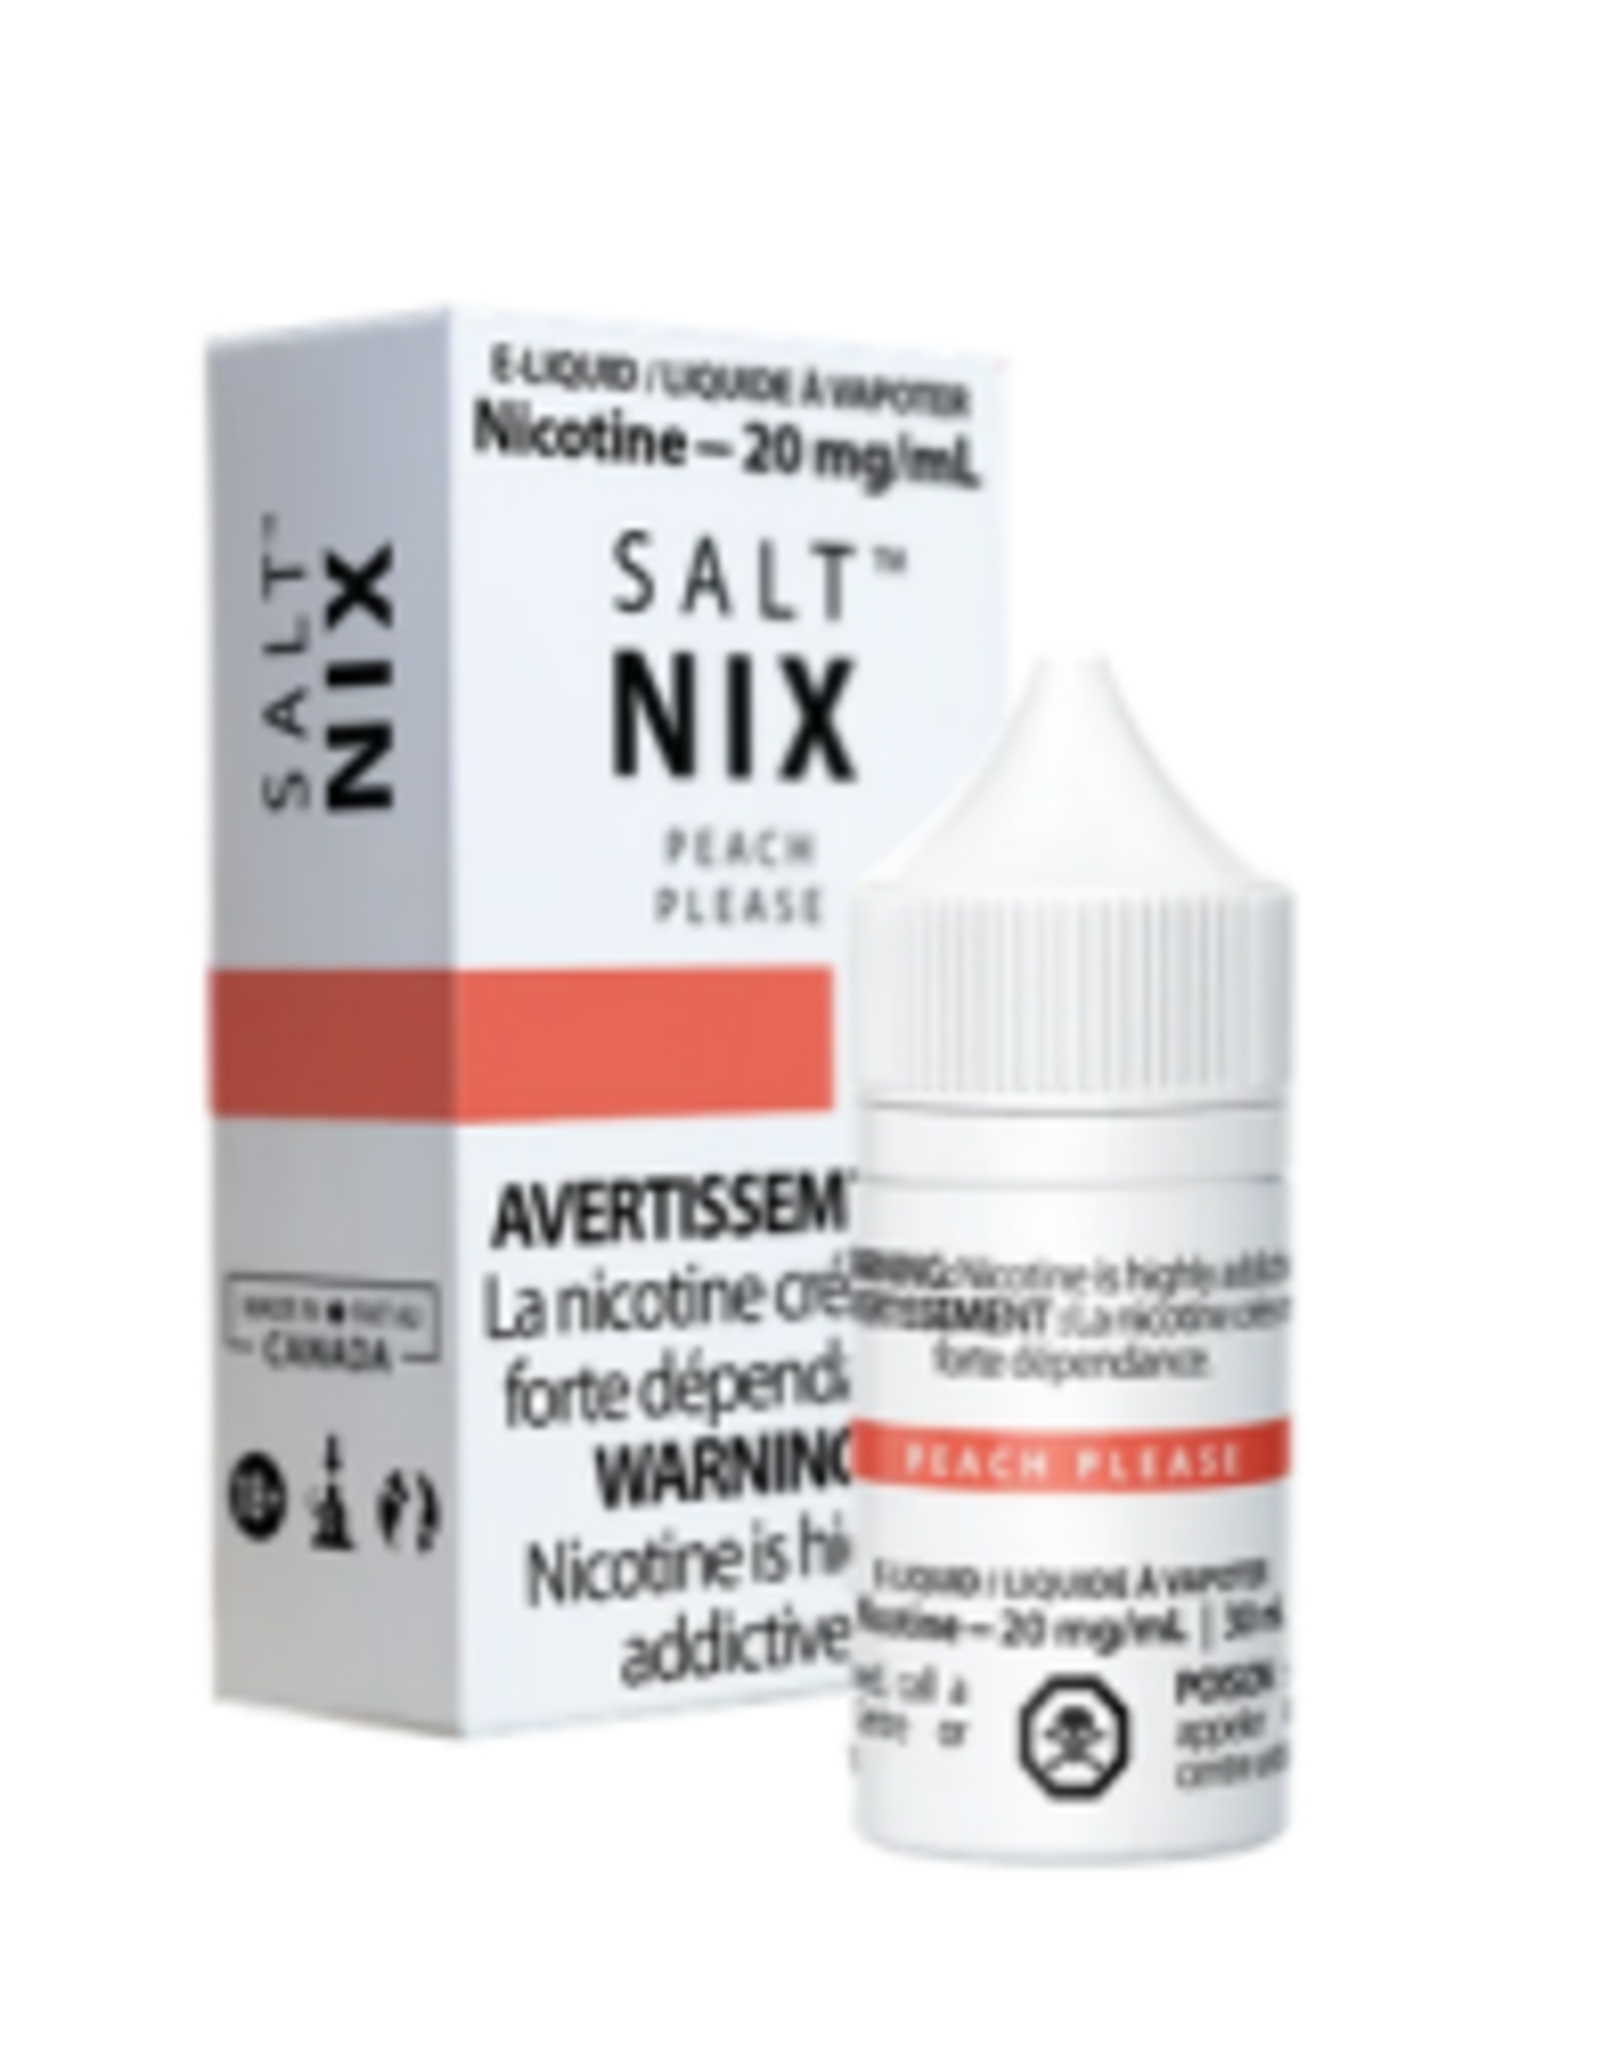 Salt Nix EXCISE 30ml Salt Nix - Peach Please